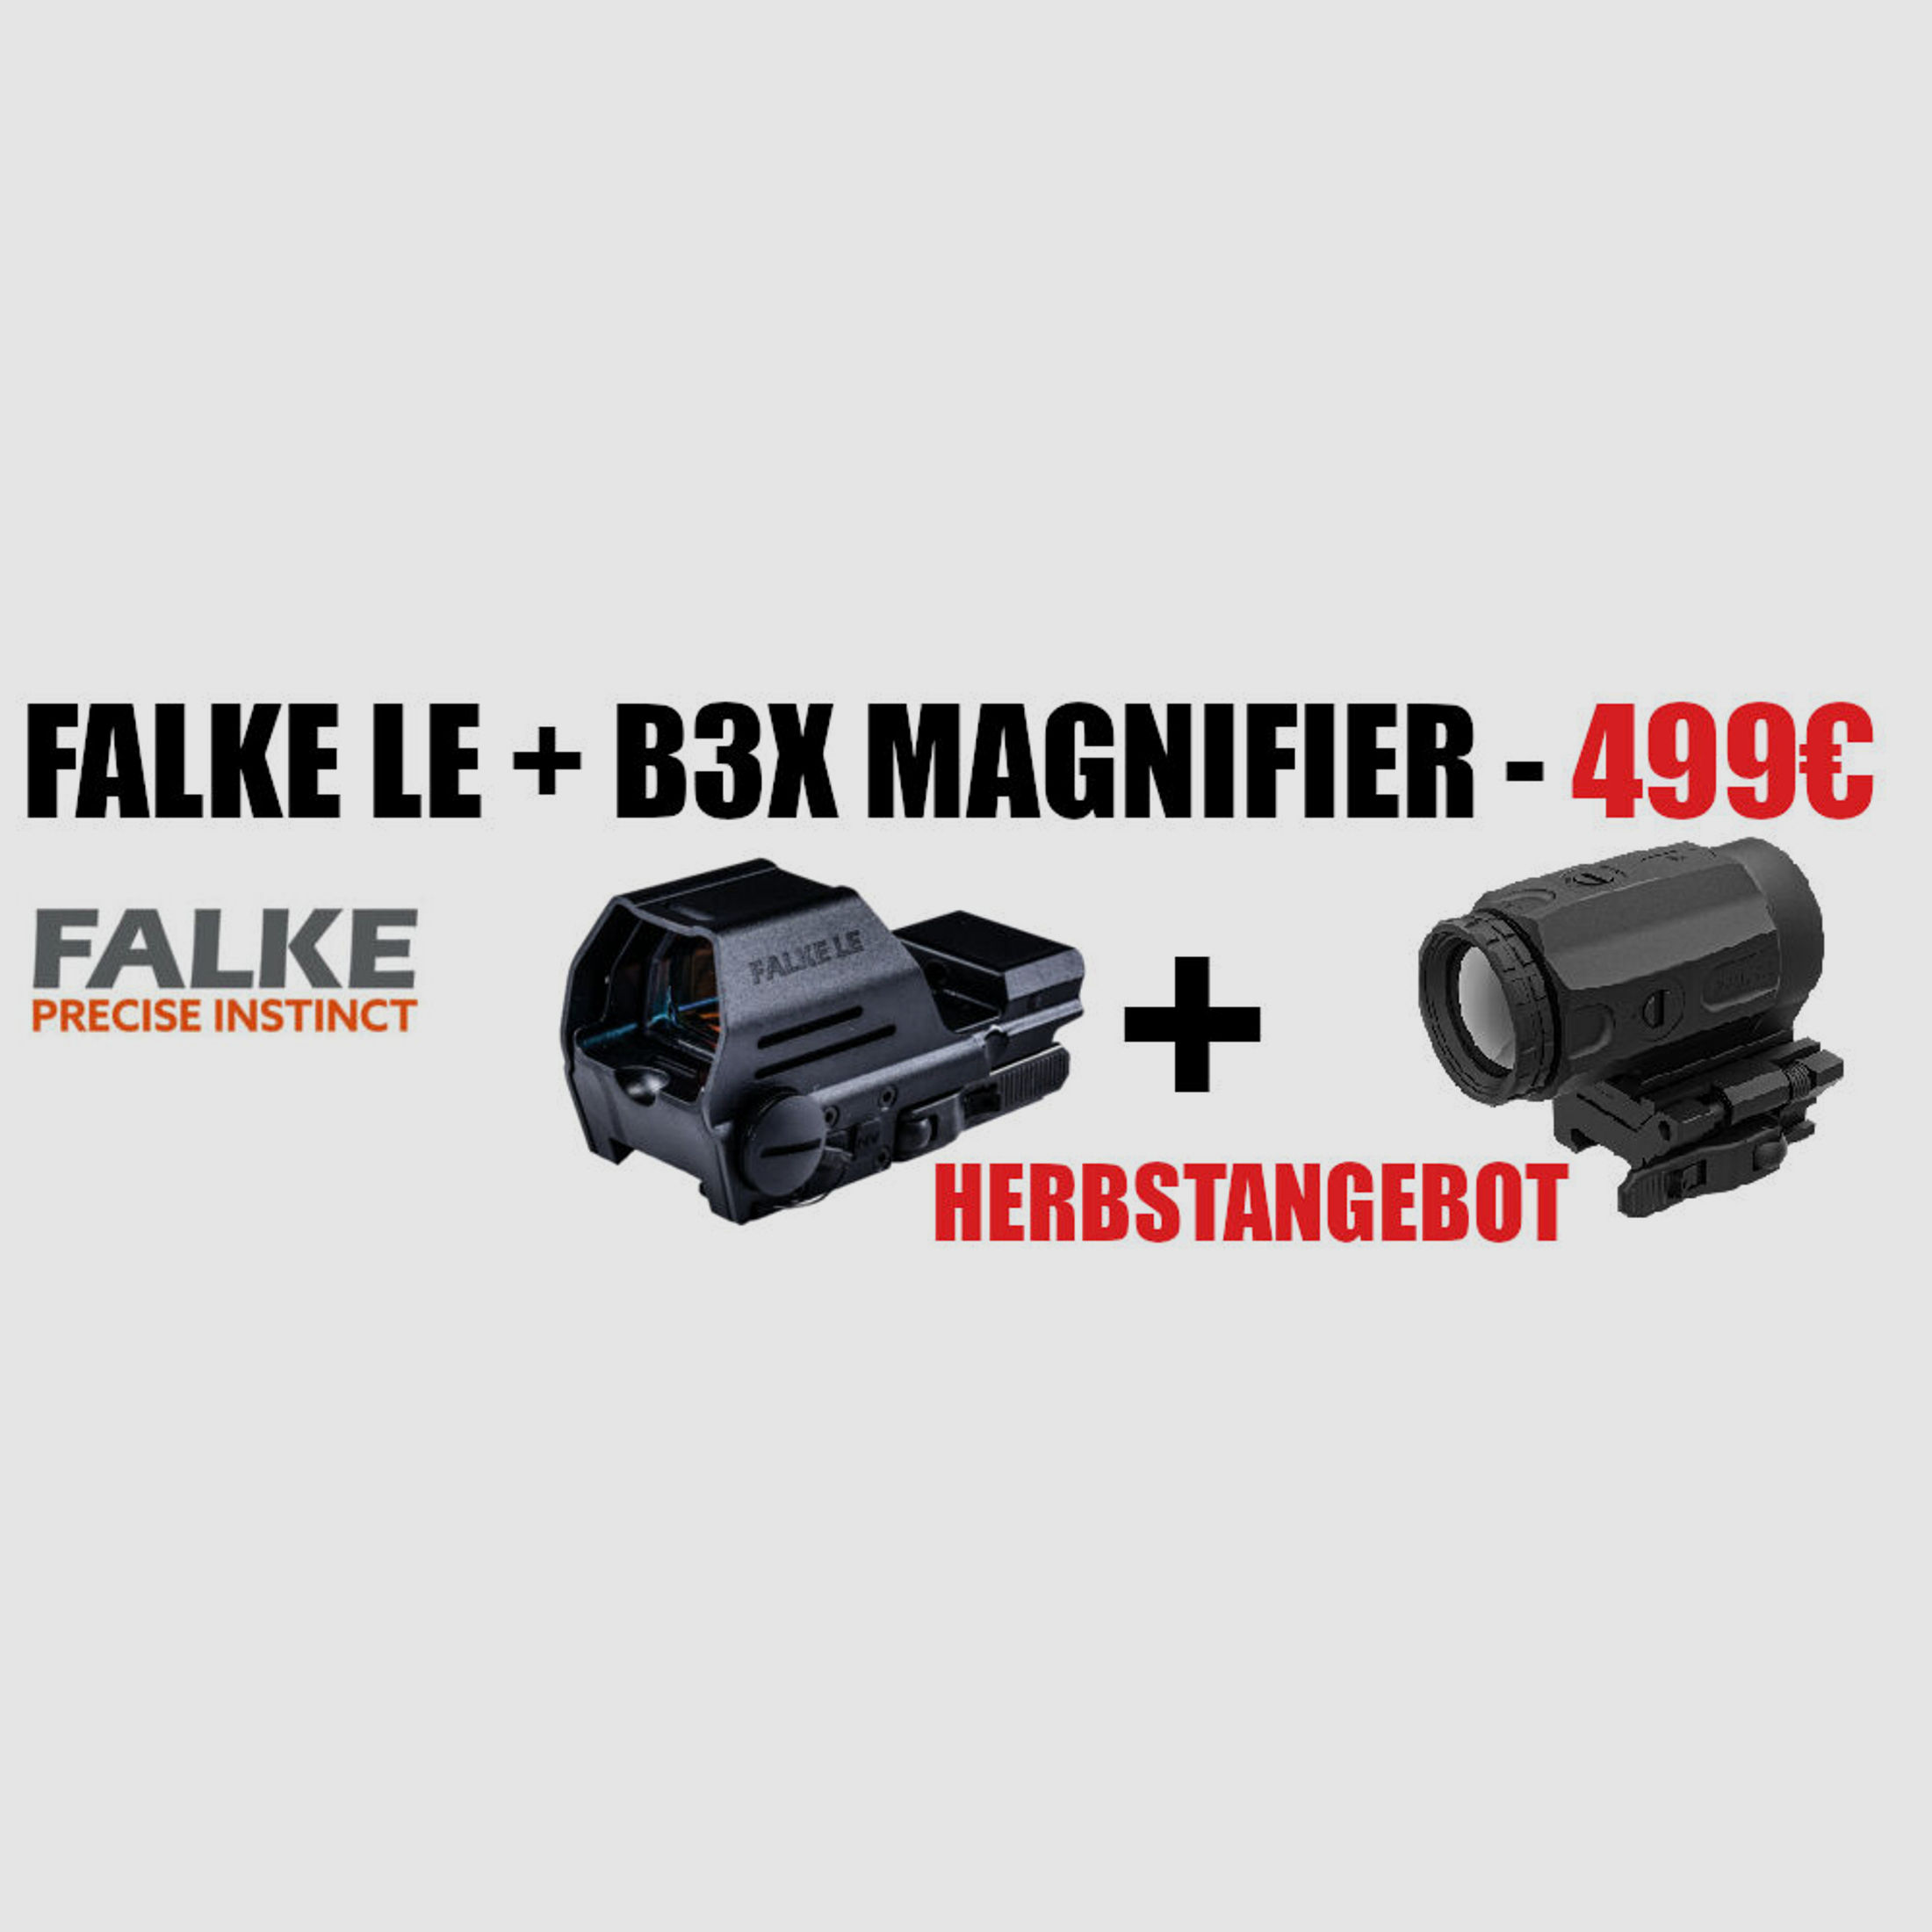 Falke LE + B3X Magnifier MEGAHERBSTANGEBOT IM SET	 Rotpunkt und Vergrößerung